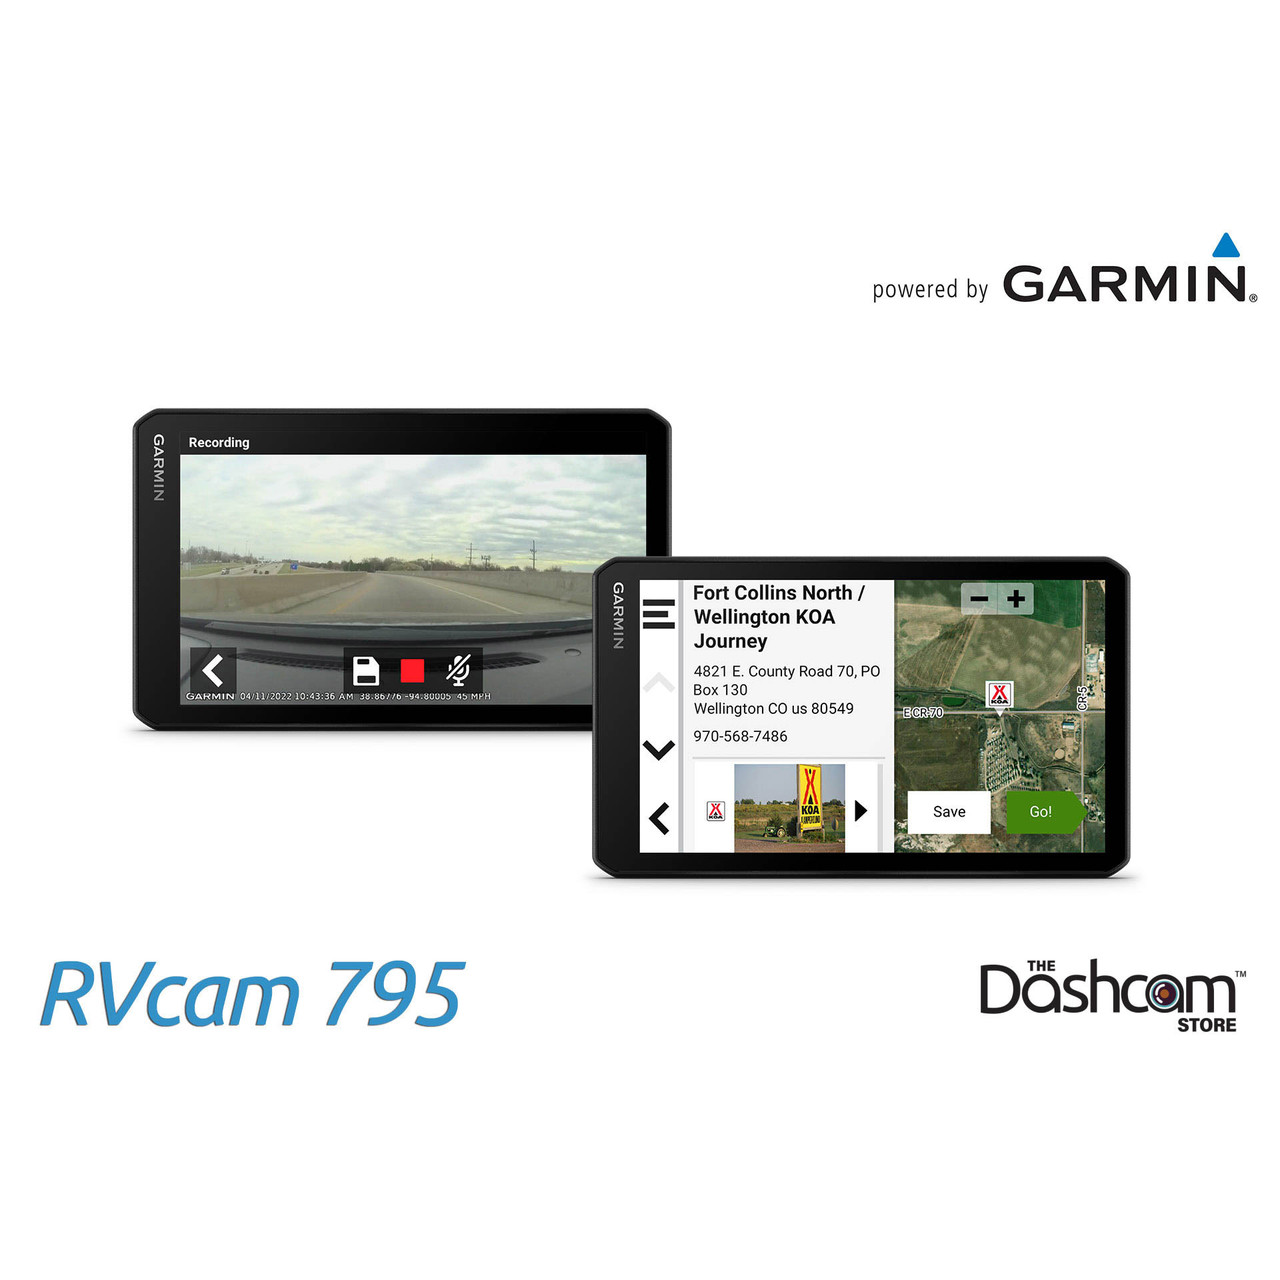 Garmin RVcam 795 GPS RV Navigator w/ Built-in Dash